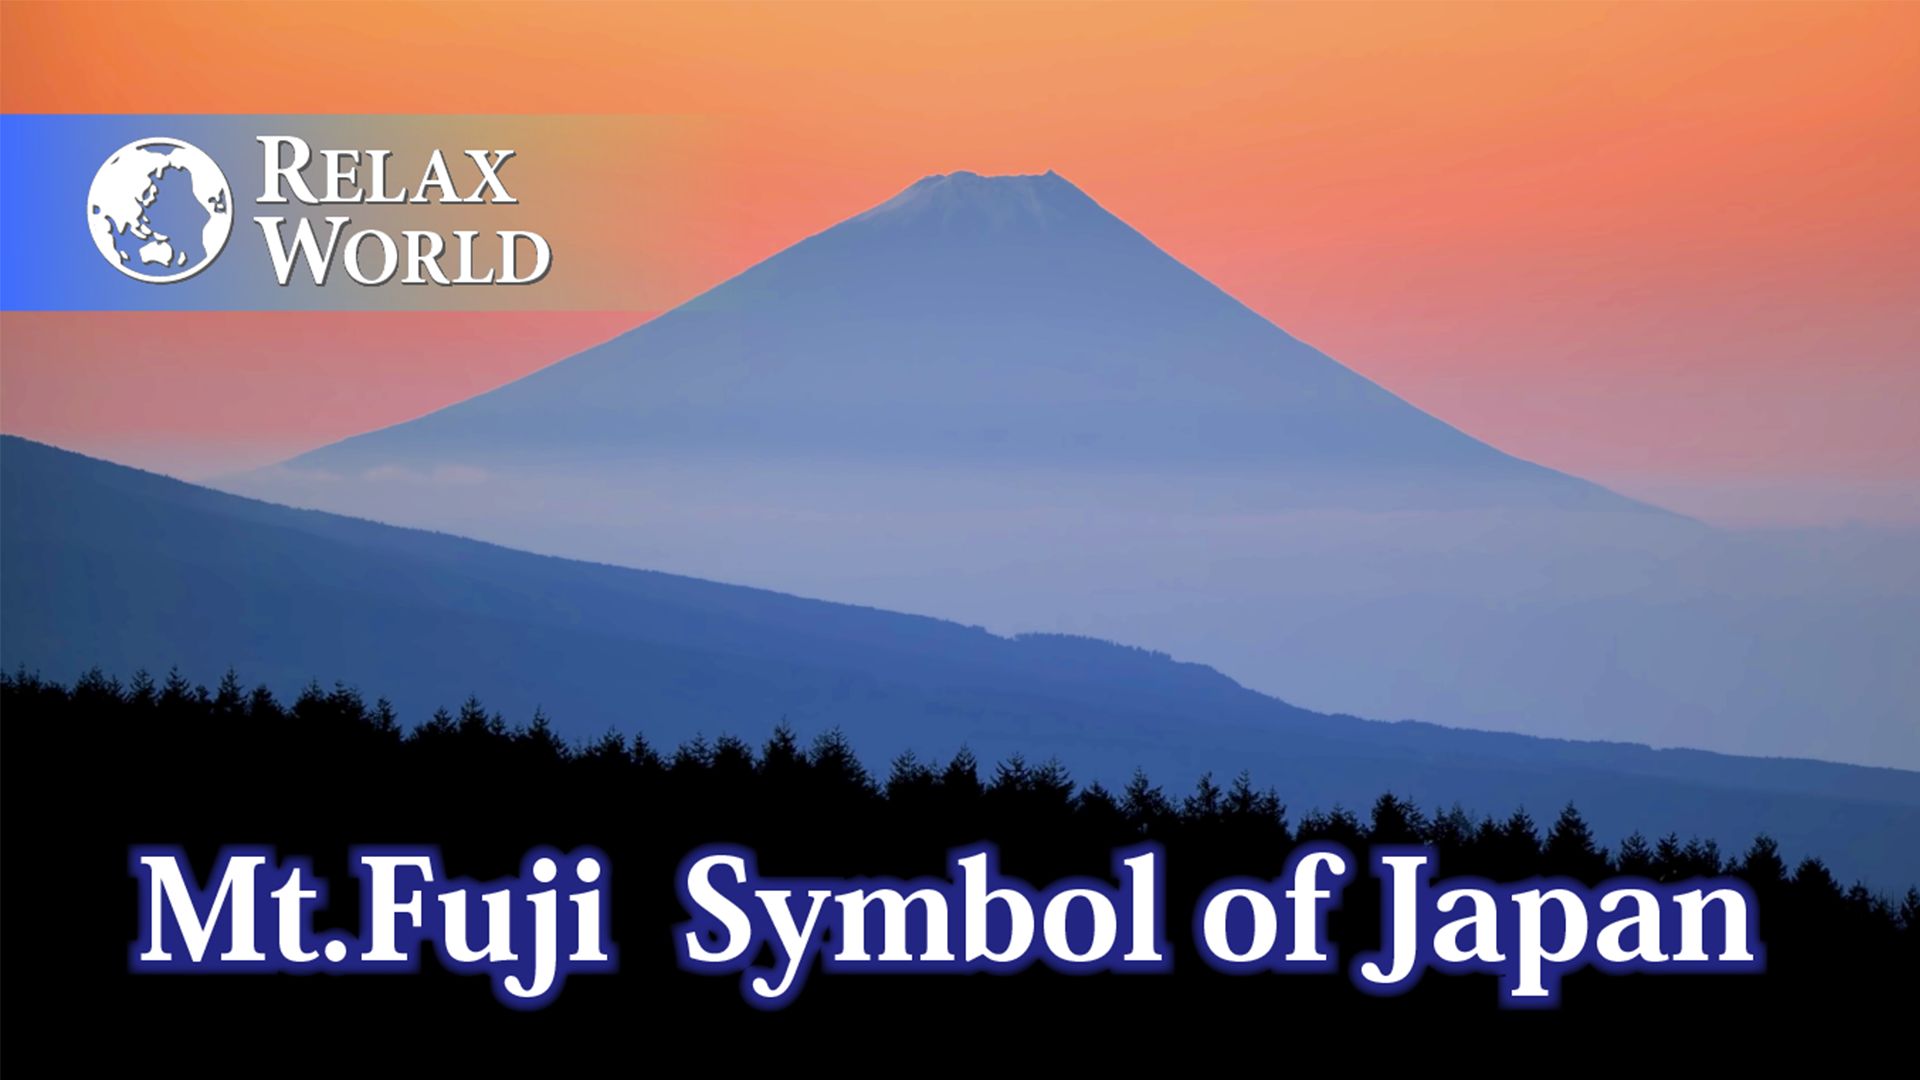 Mt. Fuji - Symbol of Japan 【RELAX WORLD】